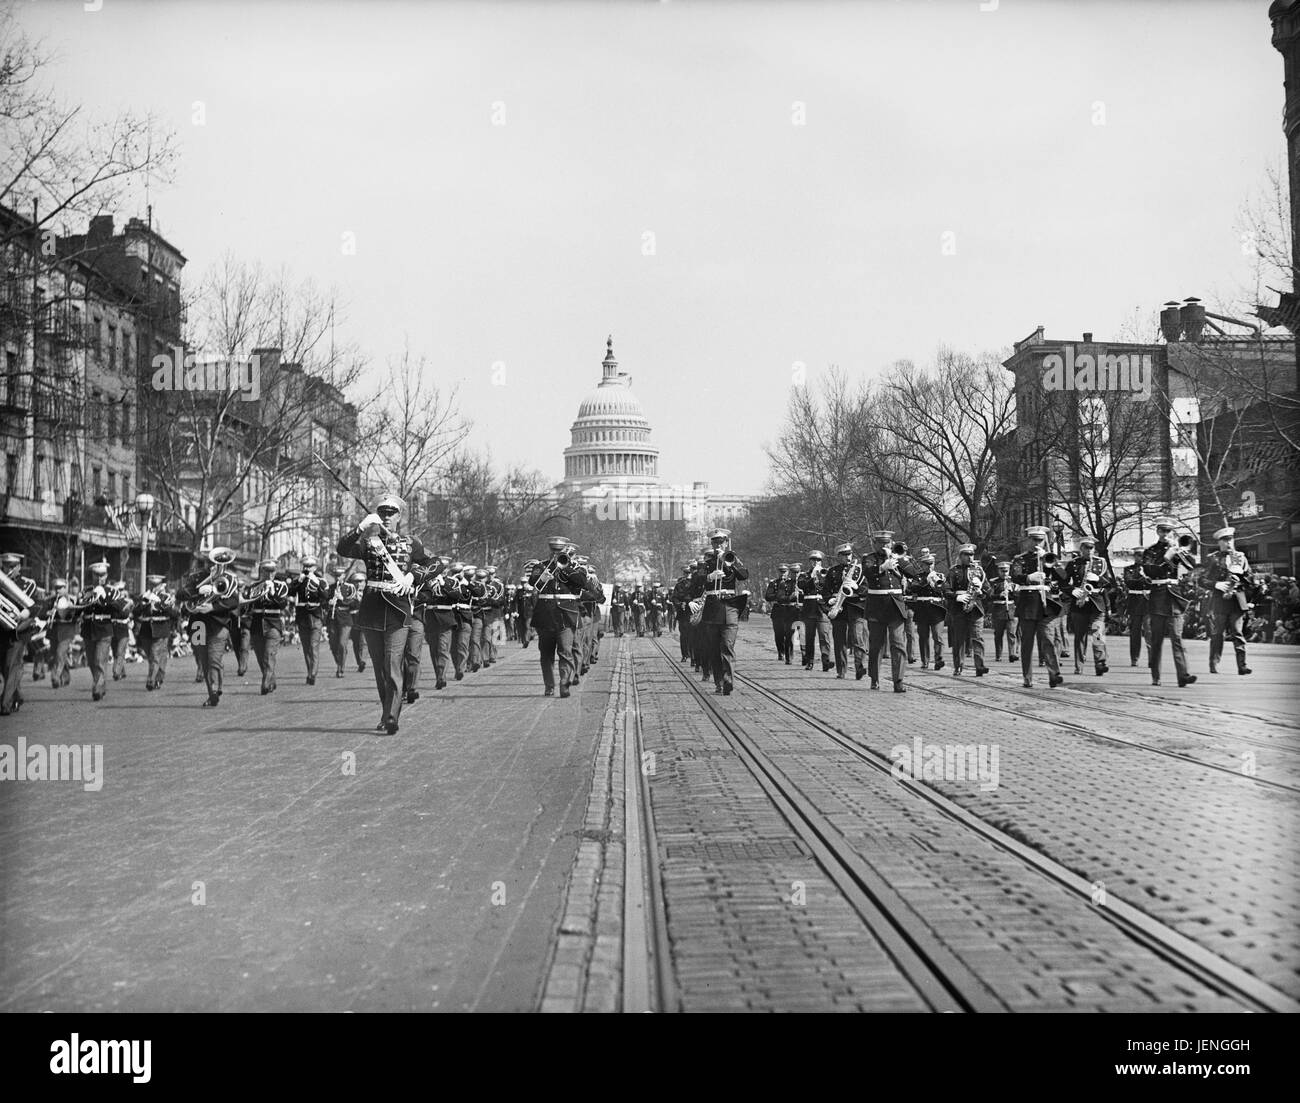 Parade on Pennsylvania Avenue with U.S. Capitol Building in Background, Washington DC, USA, Harris & Ewing, April 1932 Stock Photo